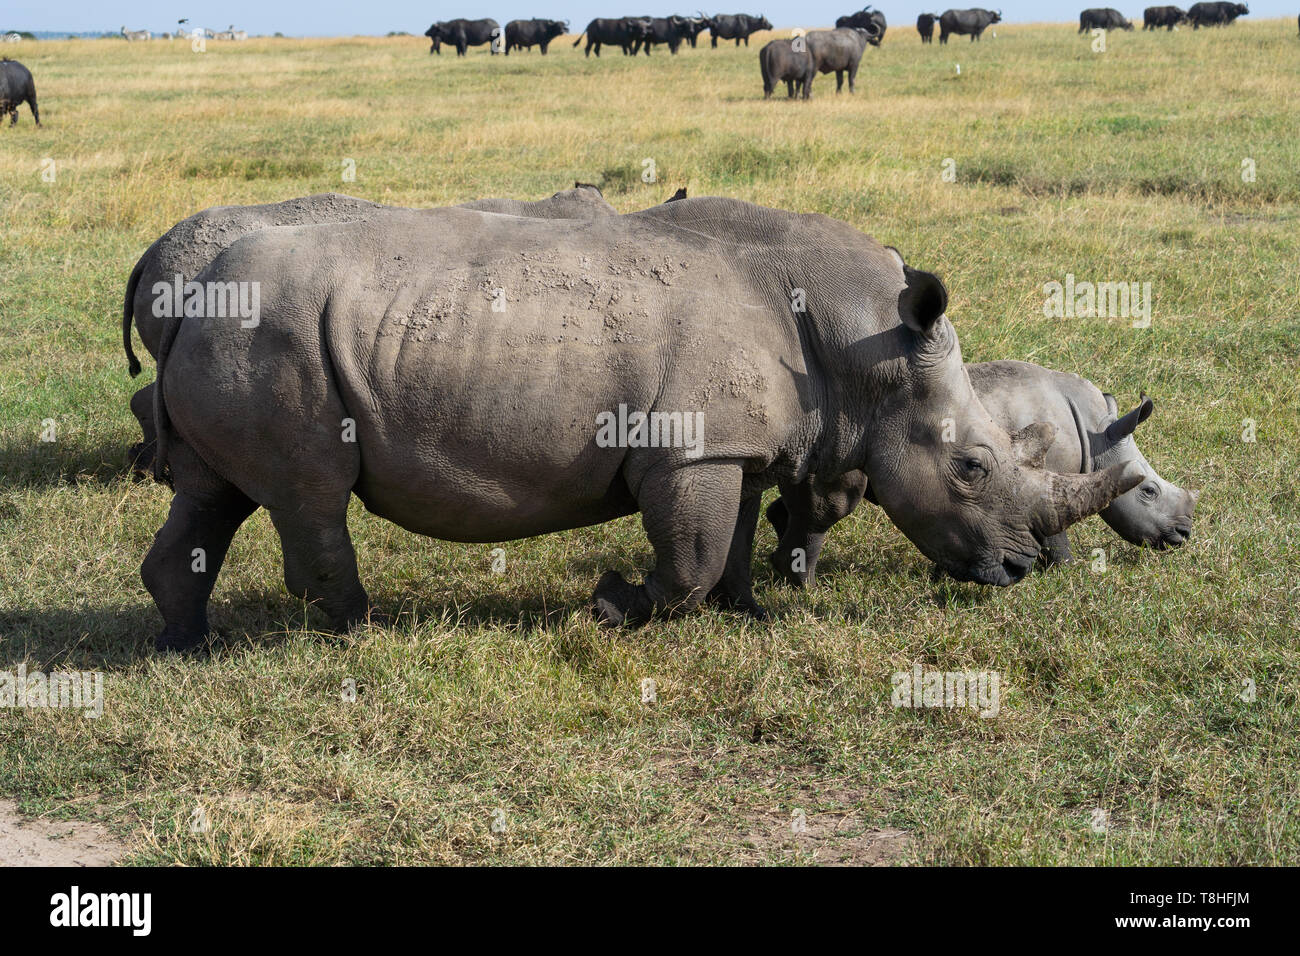 Rhino and baby walking through grass in africa Stock Photo